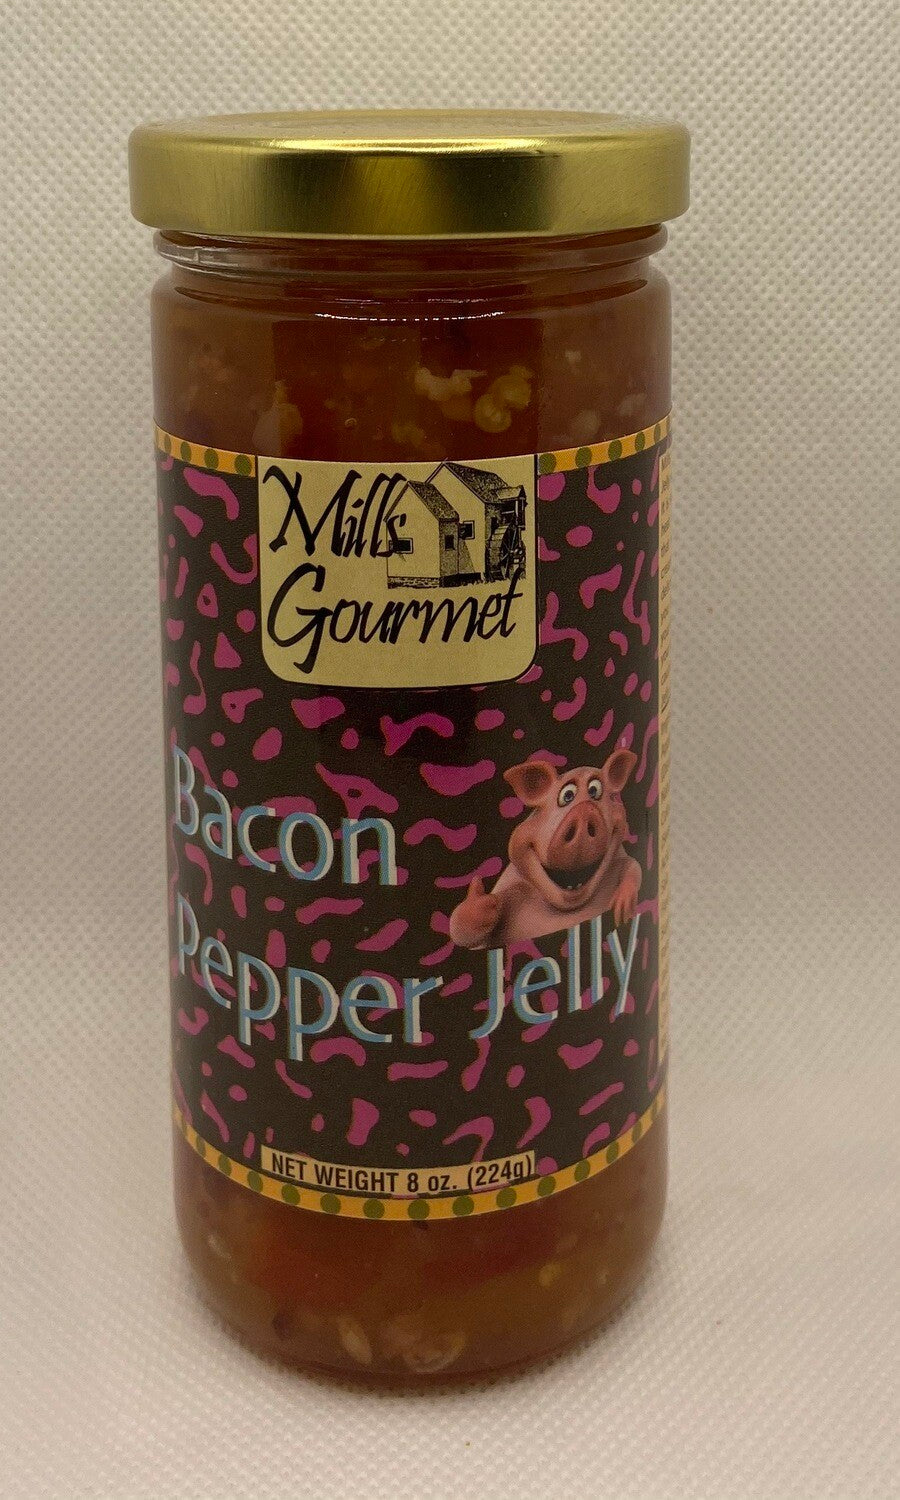 Pepper Jelly || Bacon Pepper